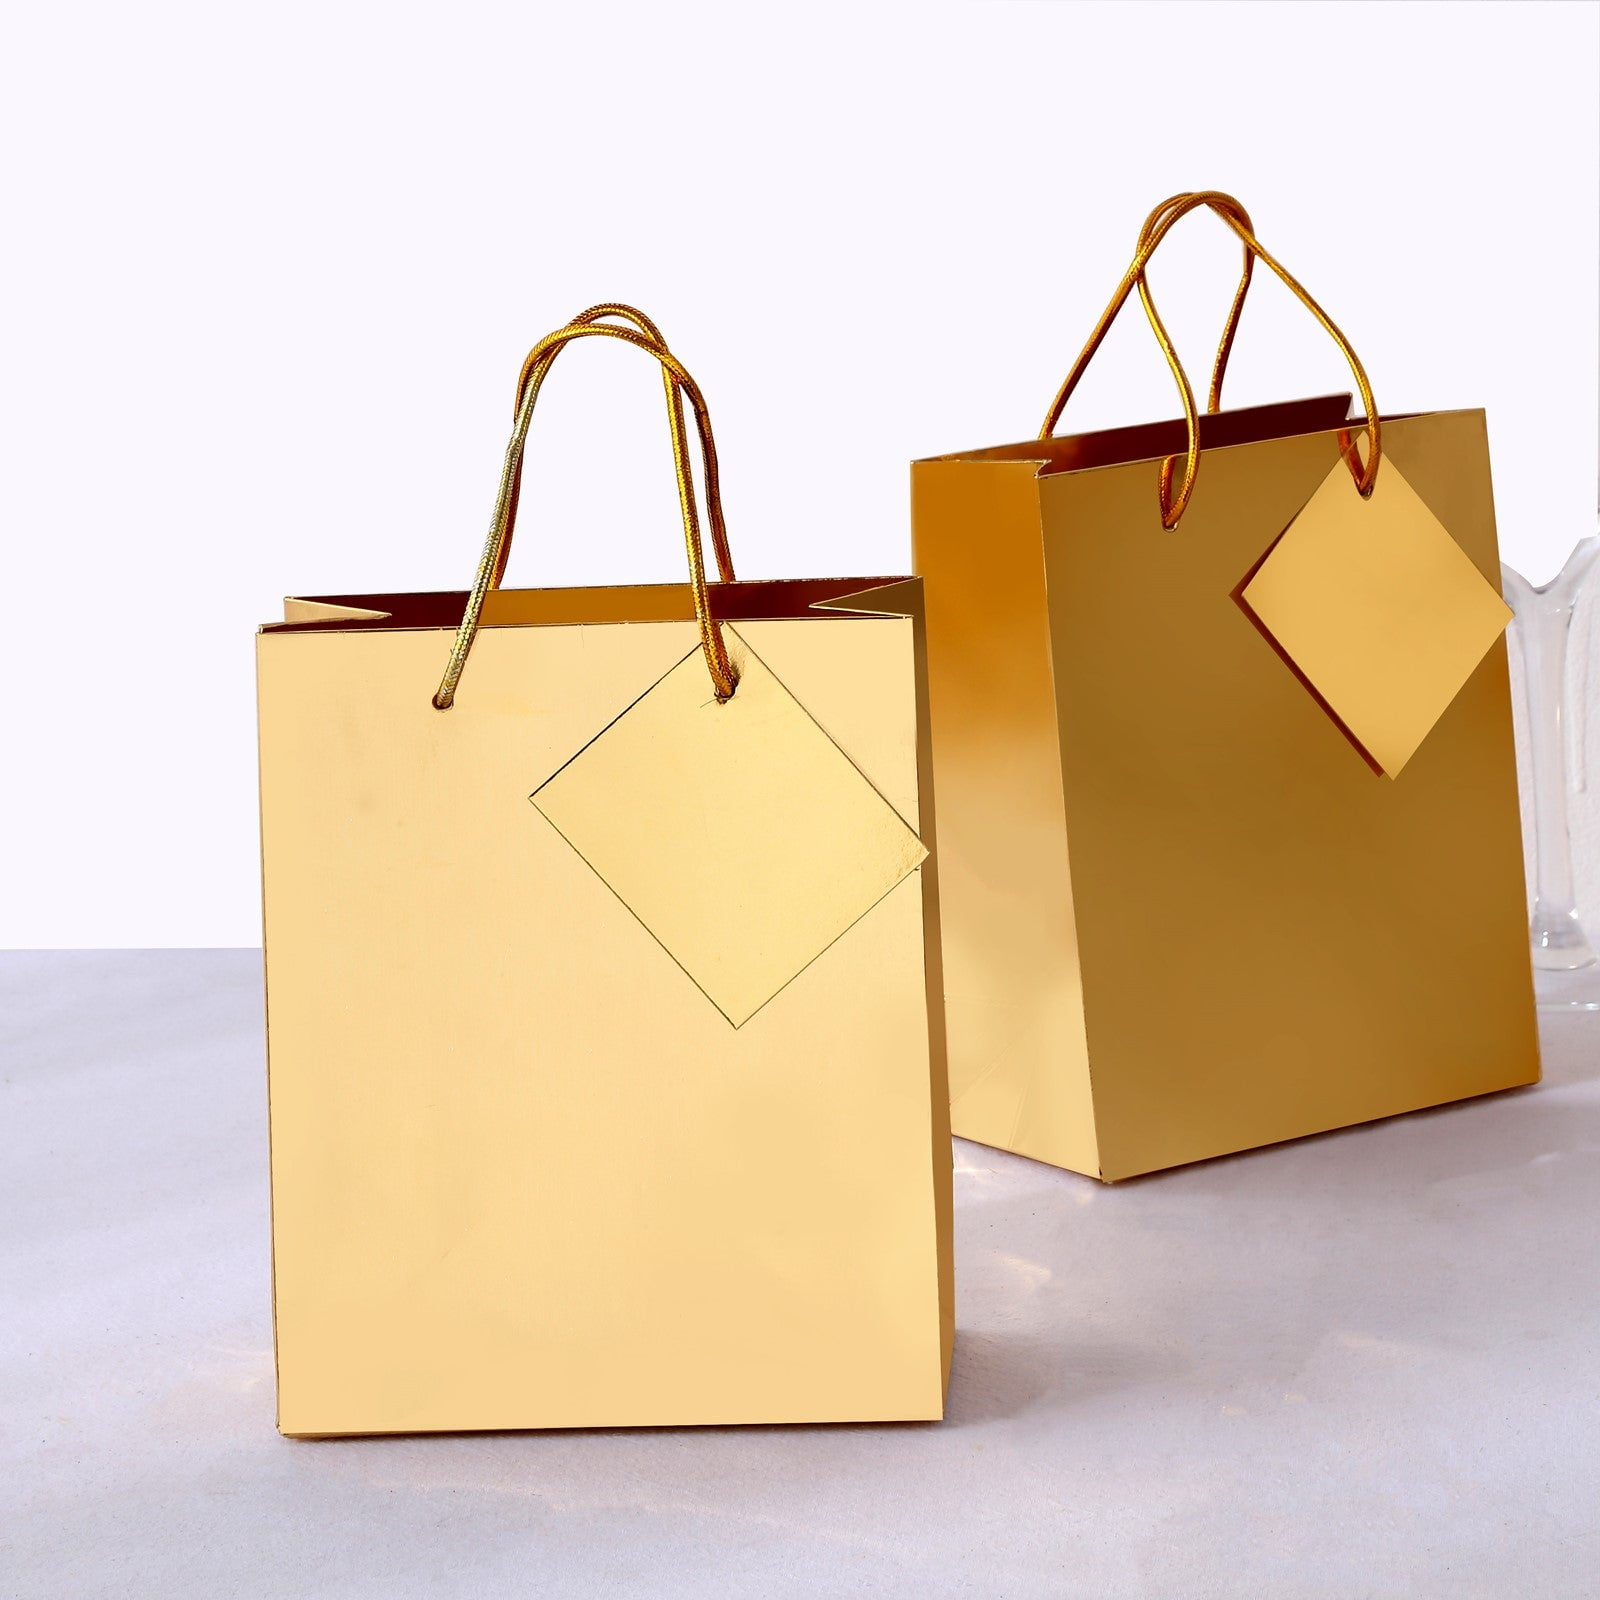 Black/Gold Metallic Foil Chevron/Dot/Geometric Wrapping Paper - 3 Ro –  Vietnam gift packaging manufacturers